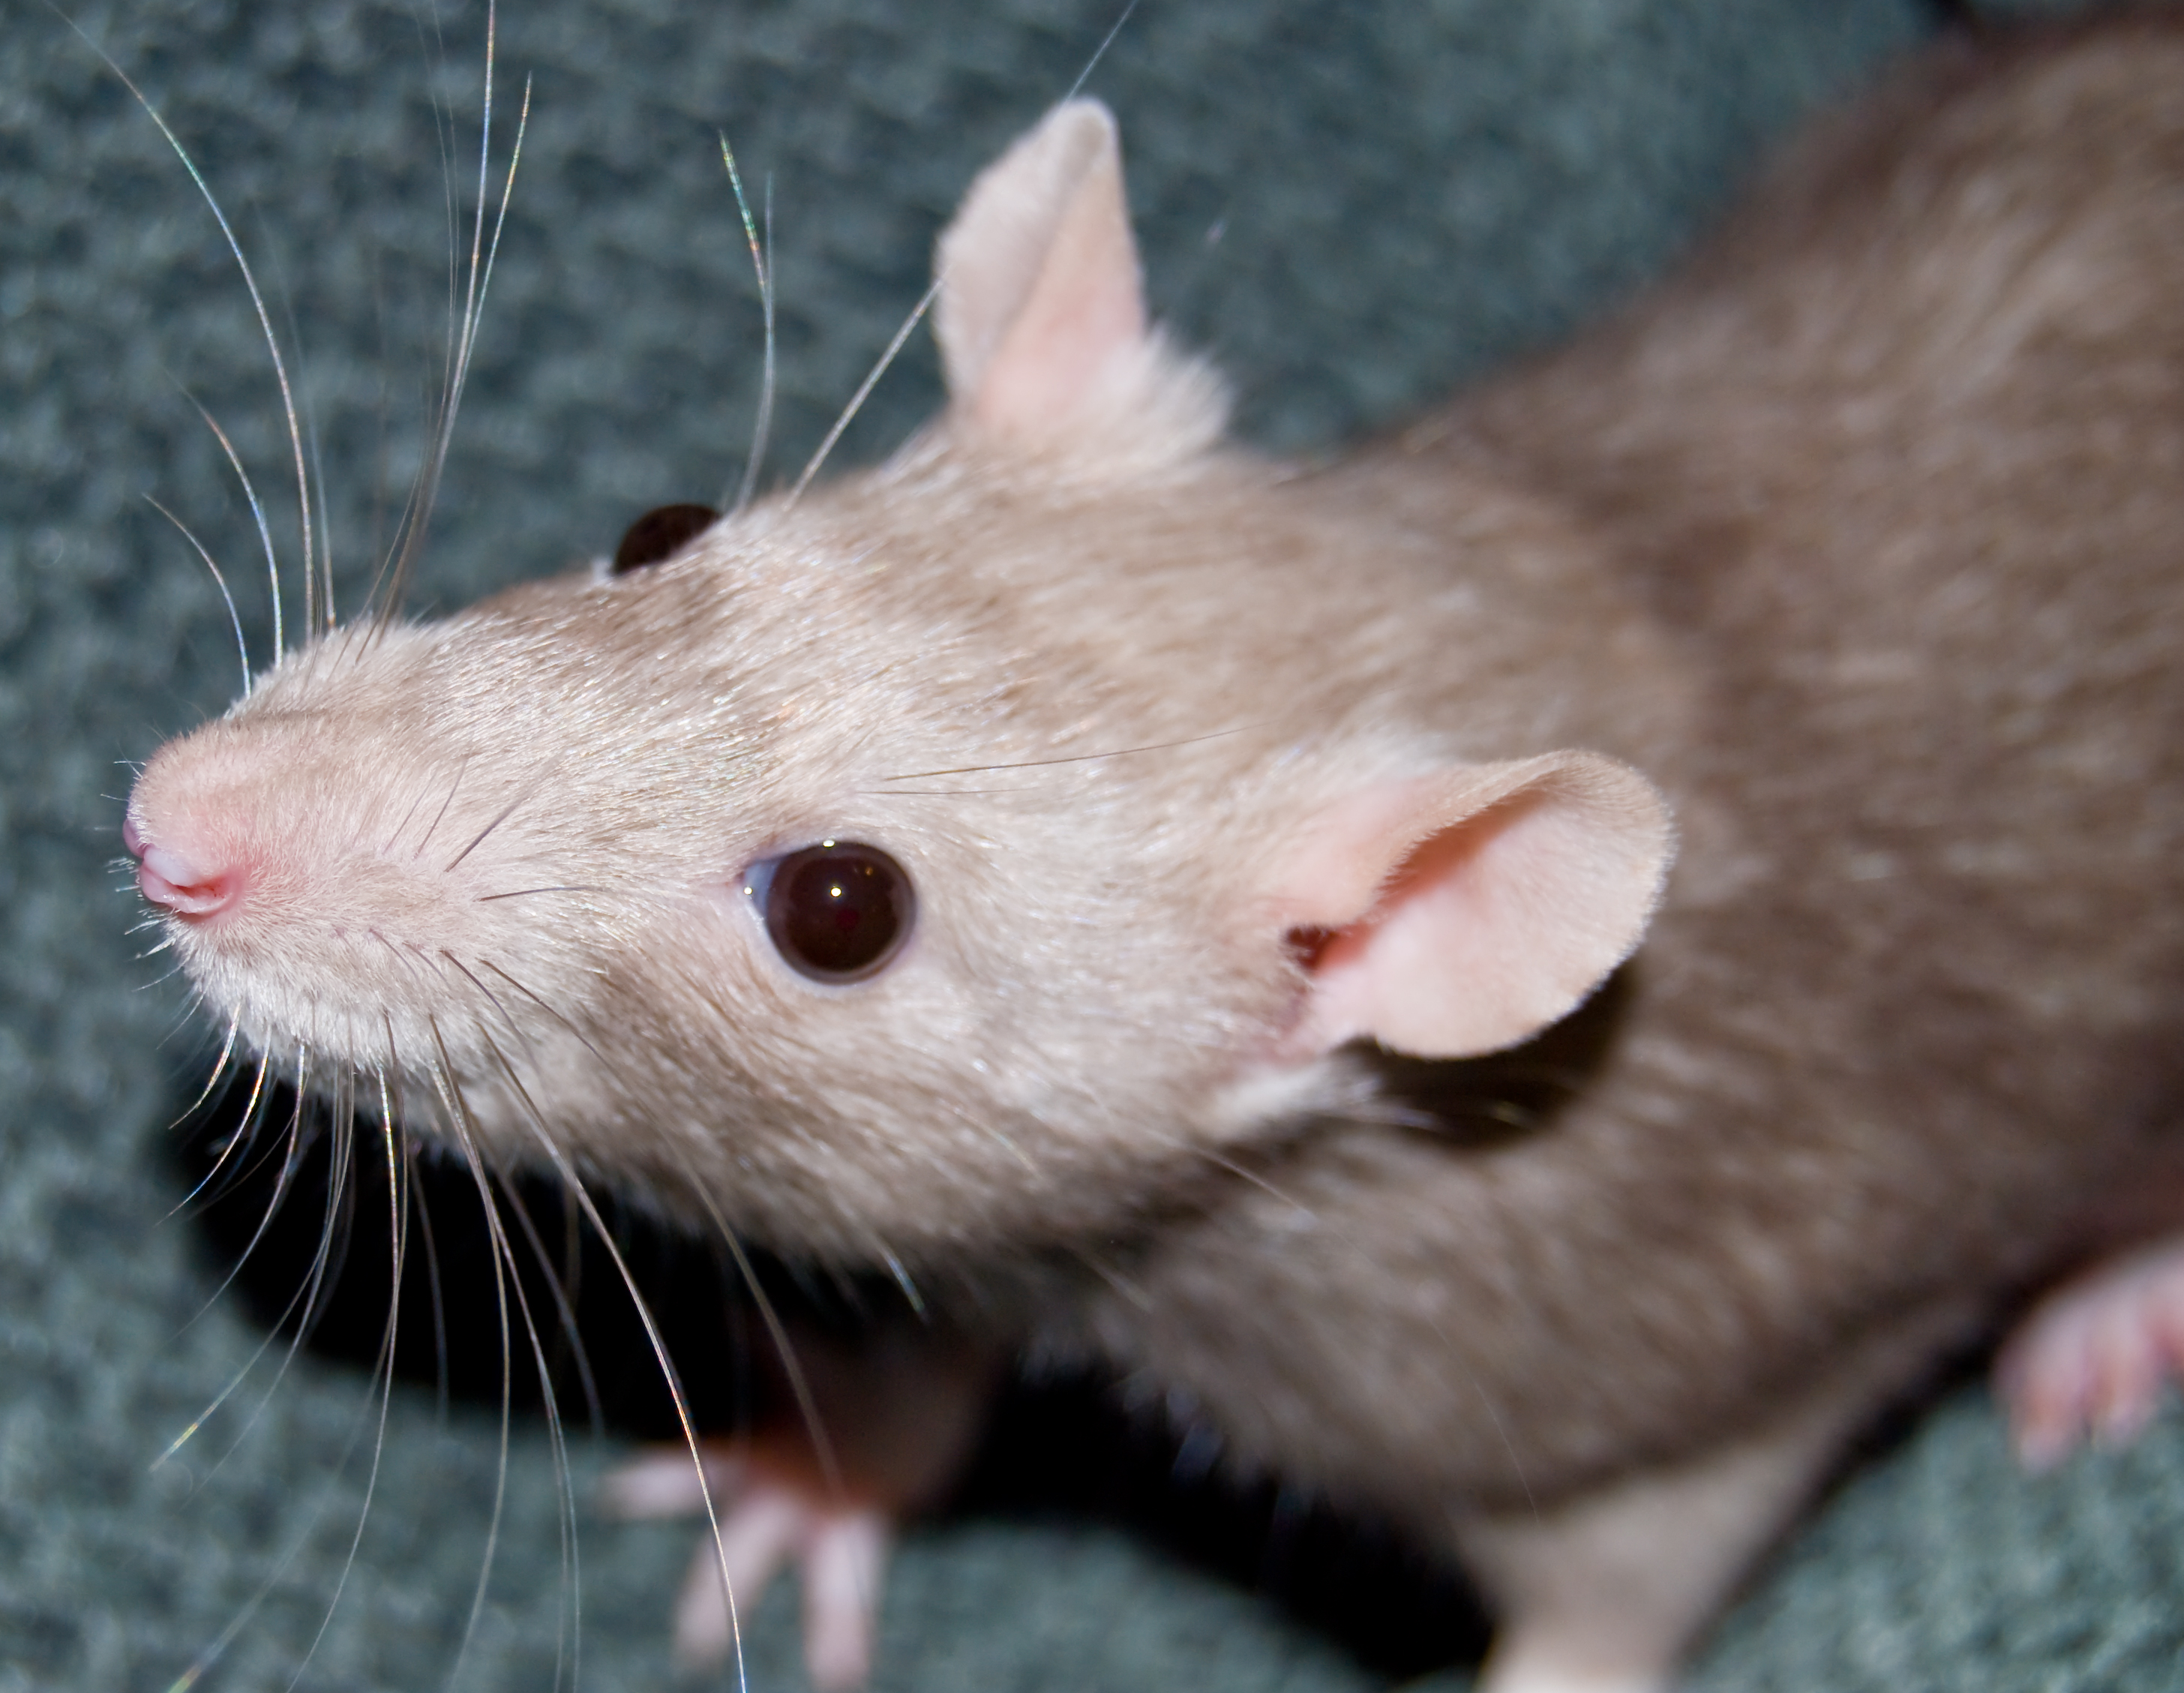 Rat musqué : Conseils traitement rat musqué